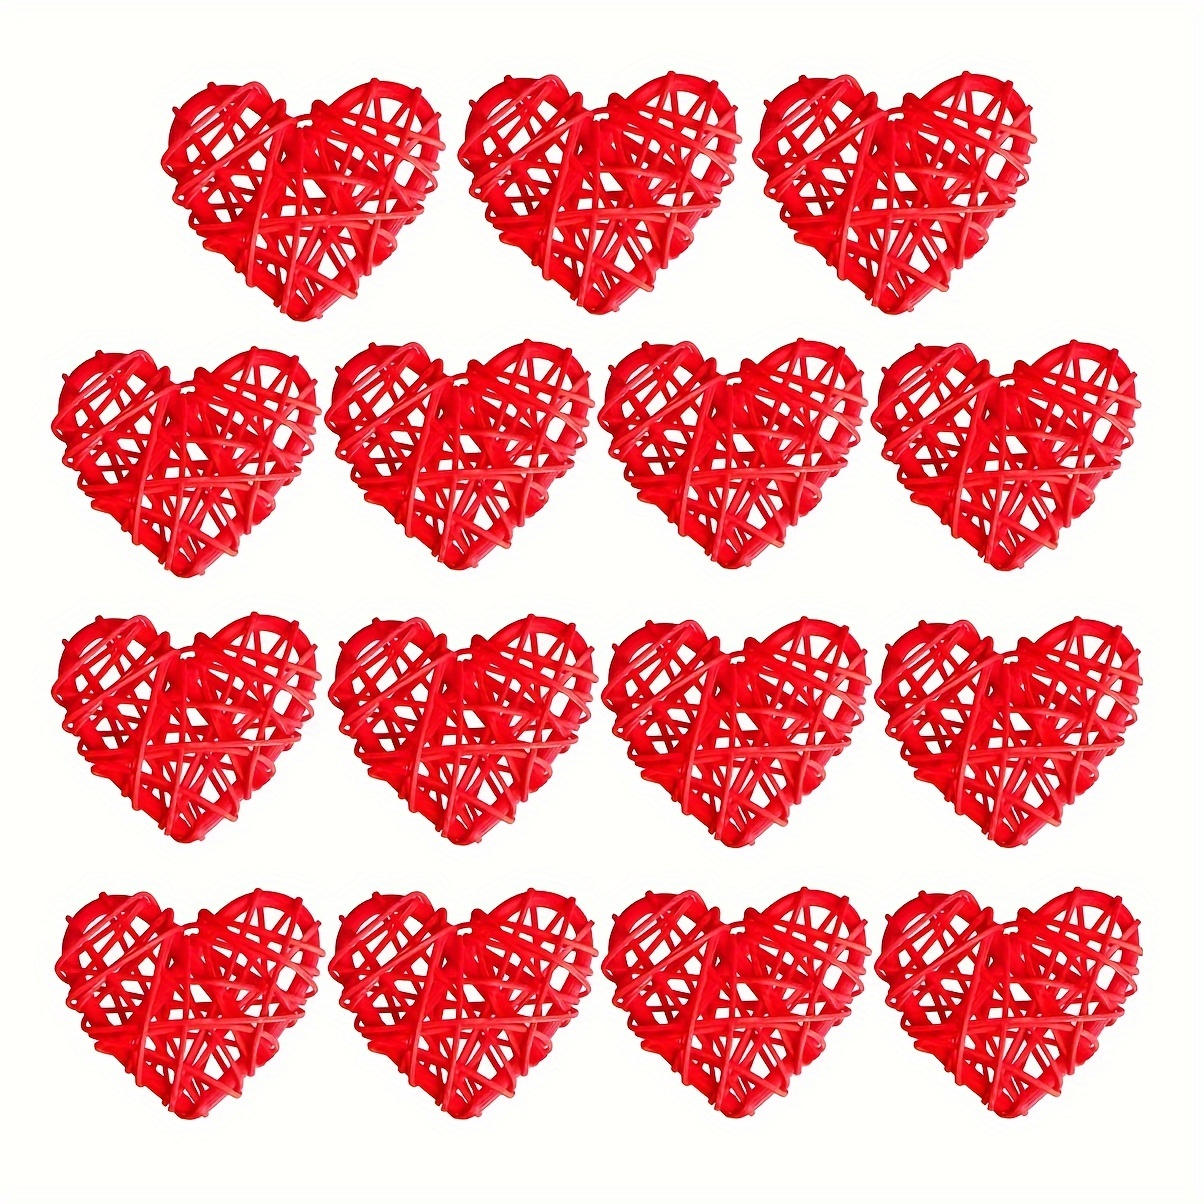  4 Pieces Valentine Heart Centerpiece Glitter 3D Heart  Centerpiece Valentine Heart-Shaped Table Decorations Craft Heart Decor  Ornament for Wedding Anniversary Party Valentine's Crafts Party Favors :  Home & Kitchen